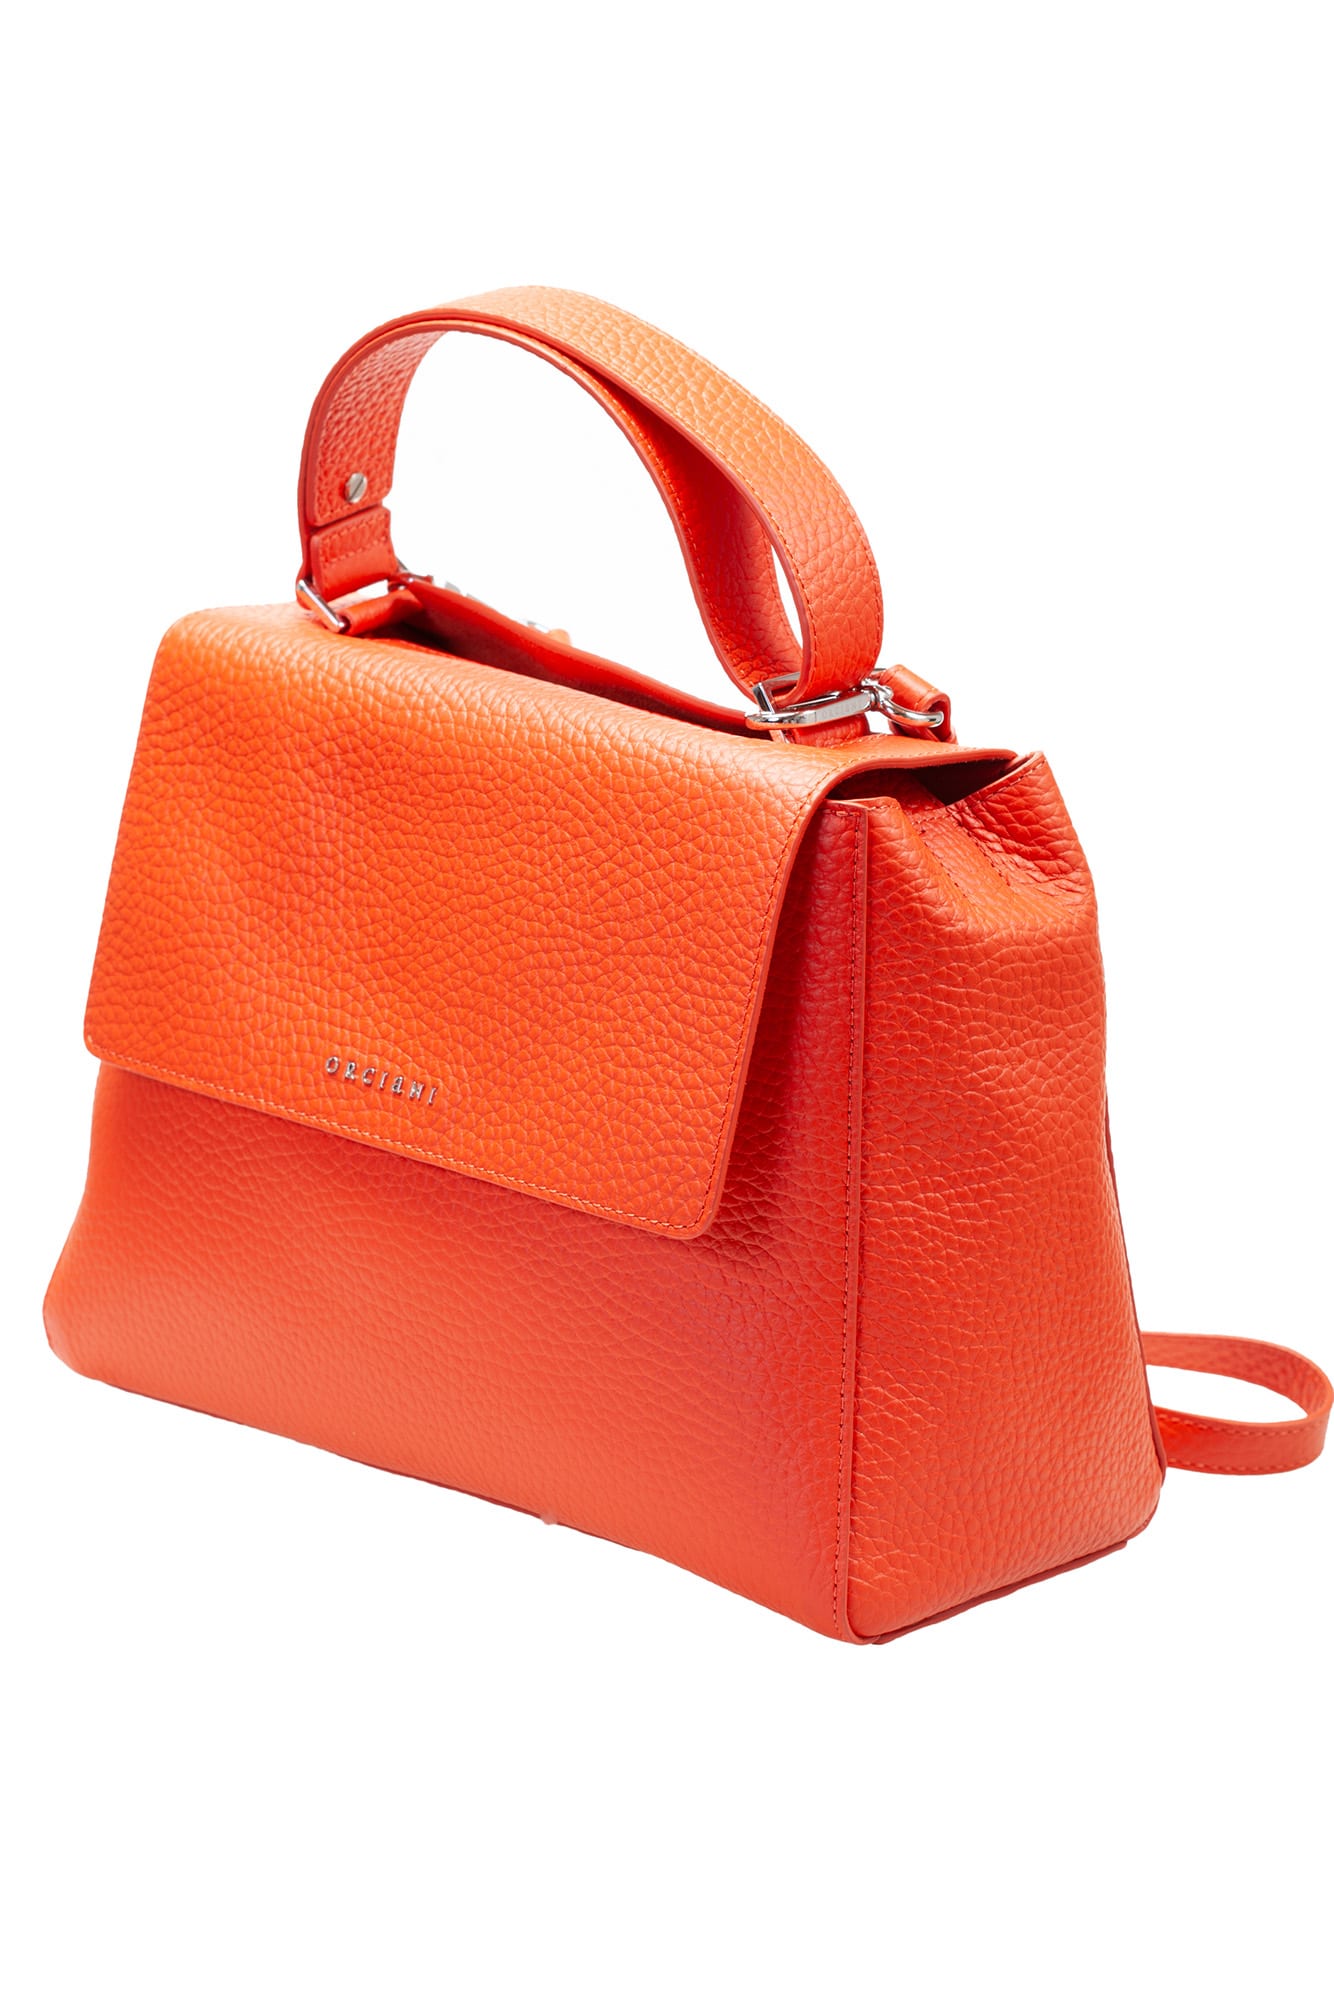 Shop Orciani Bags.. Orange